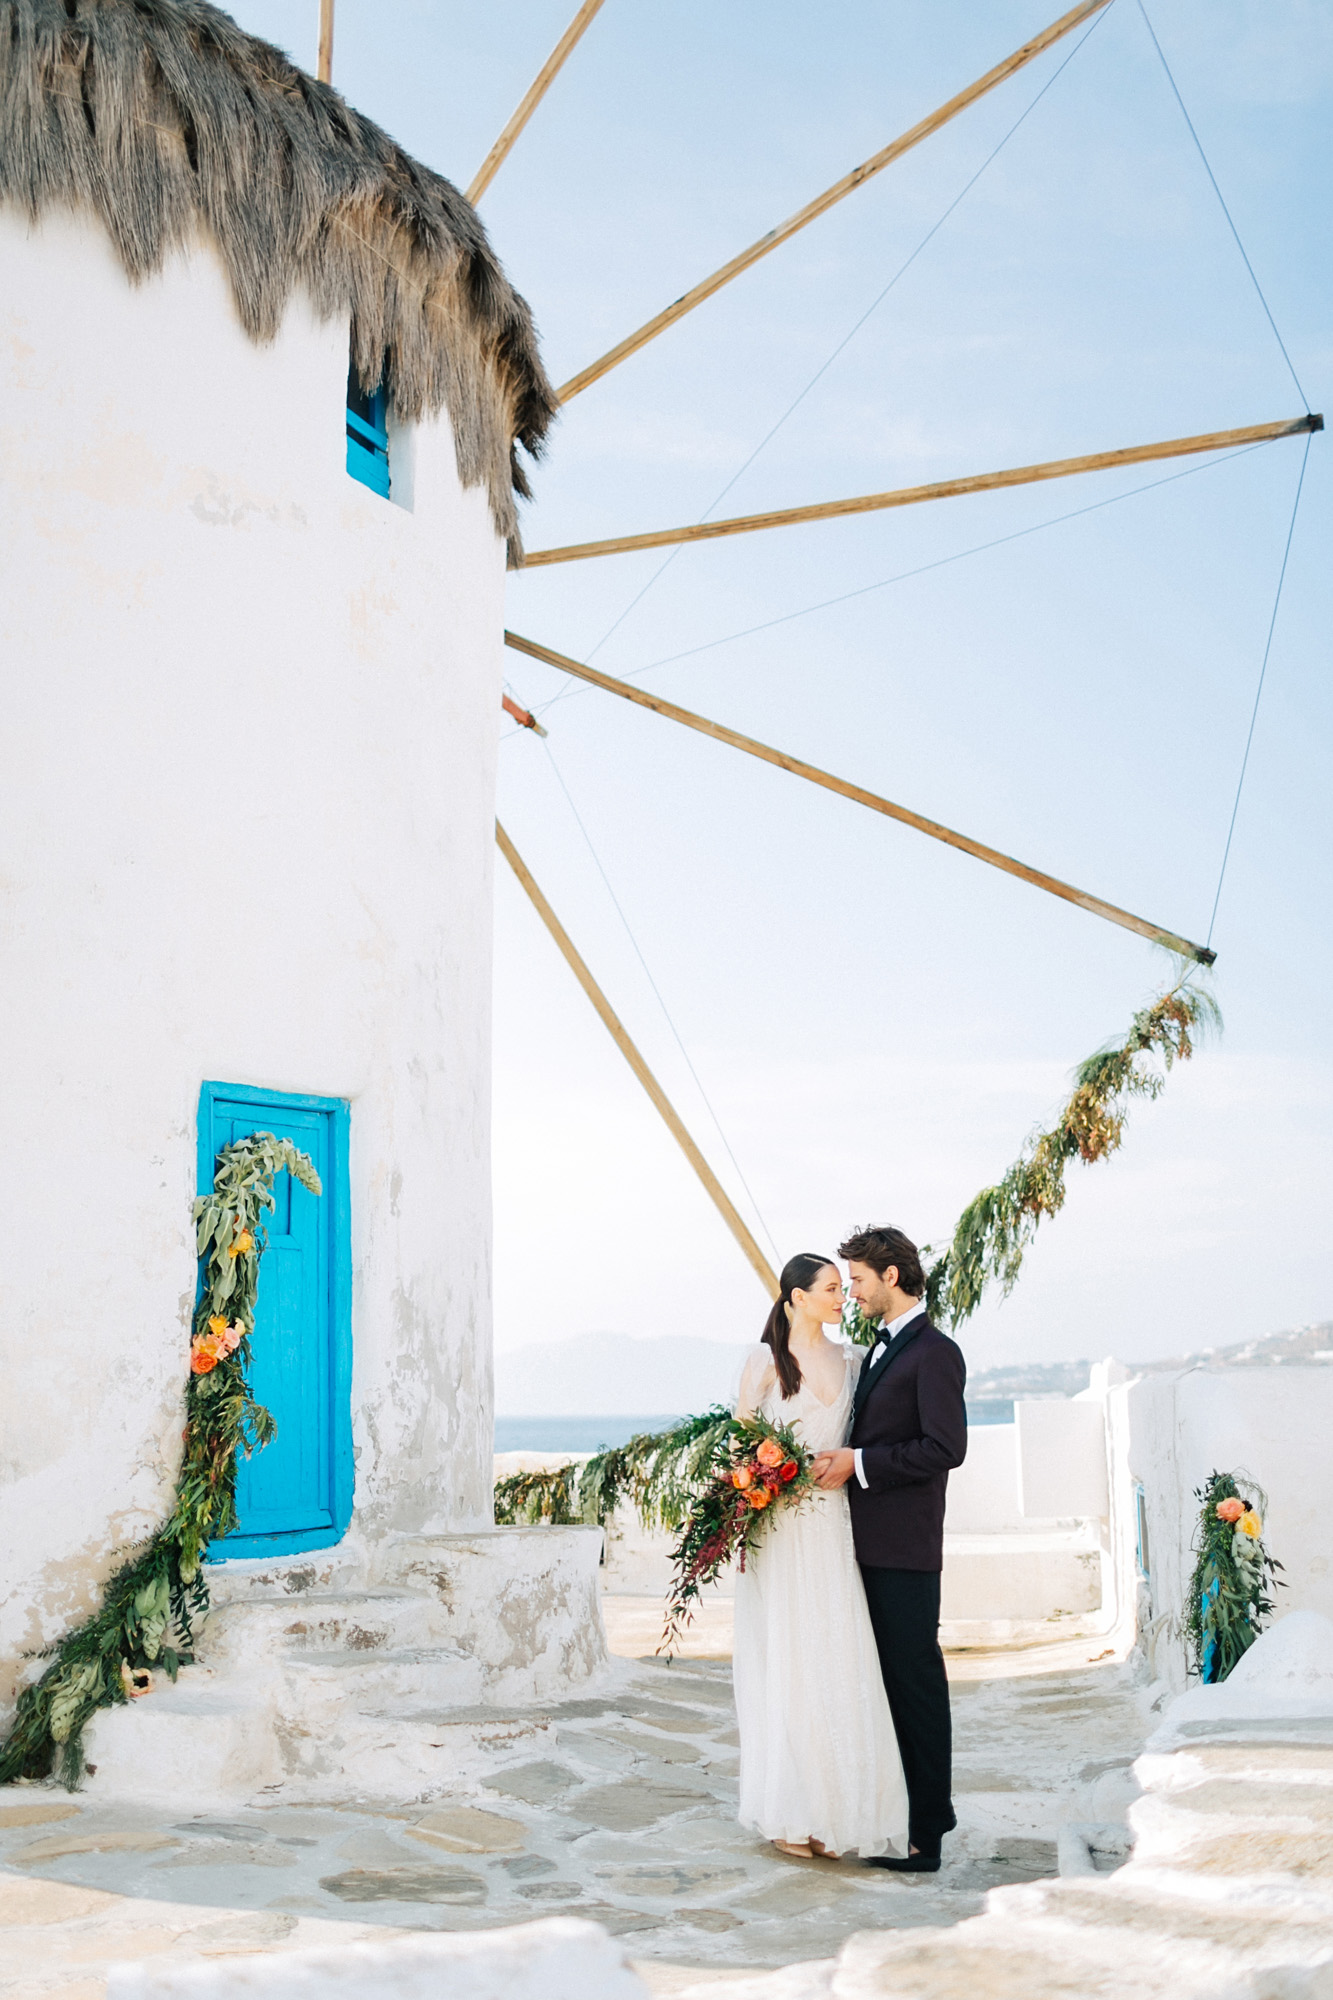 Stylish bride and groom on their destination wedding in Mykonos, posing under the windmills.